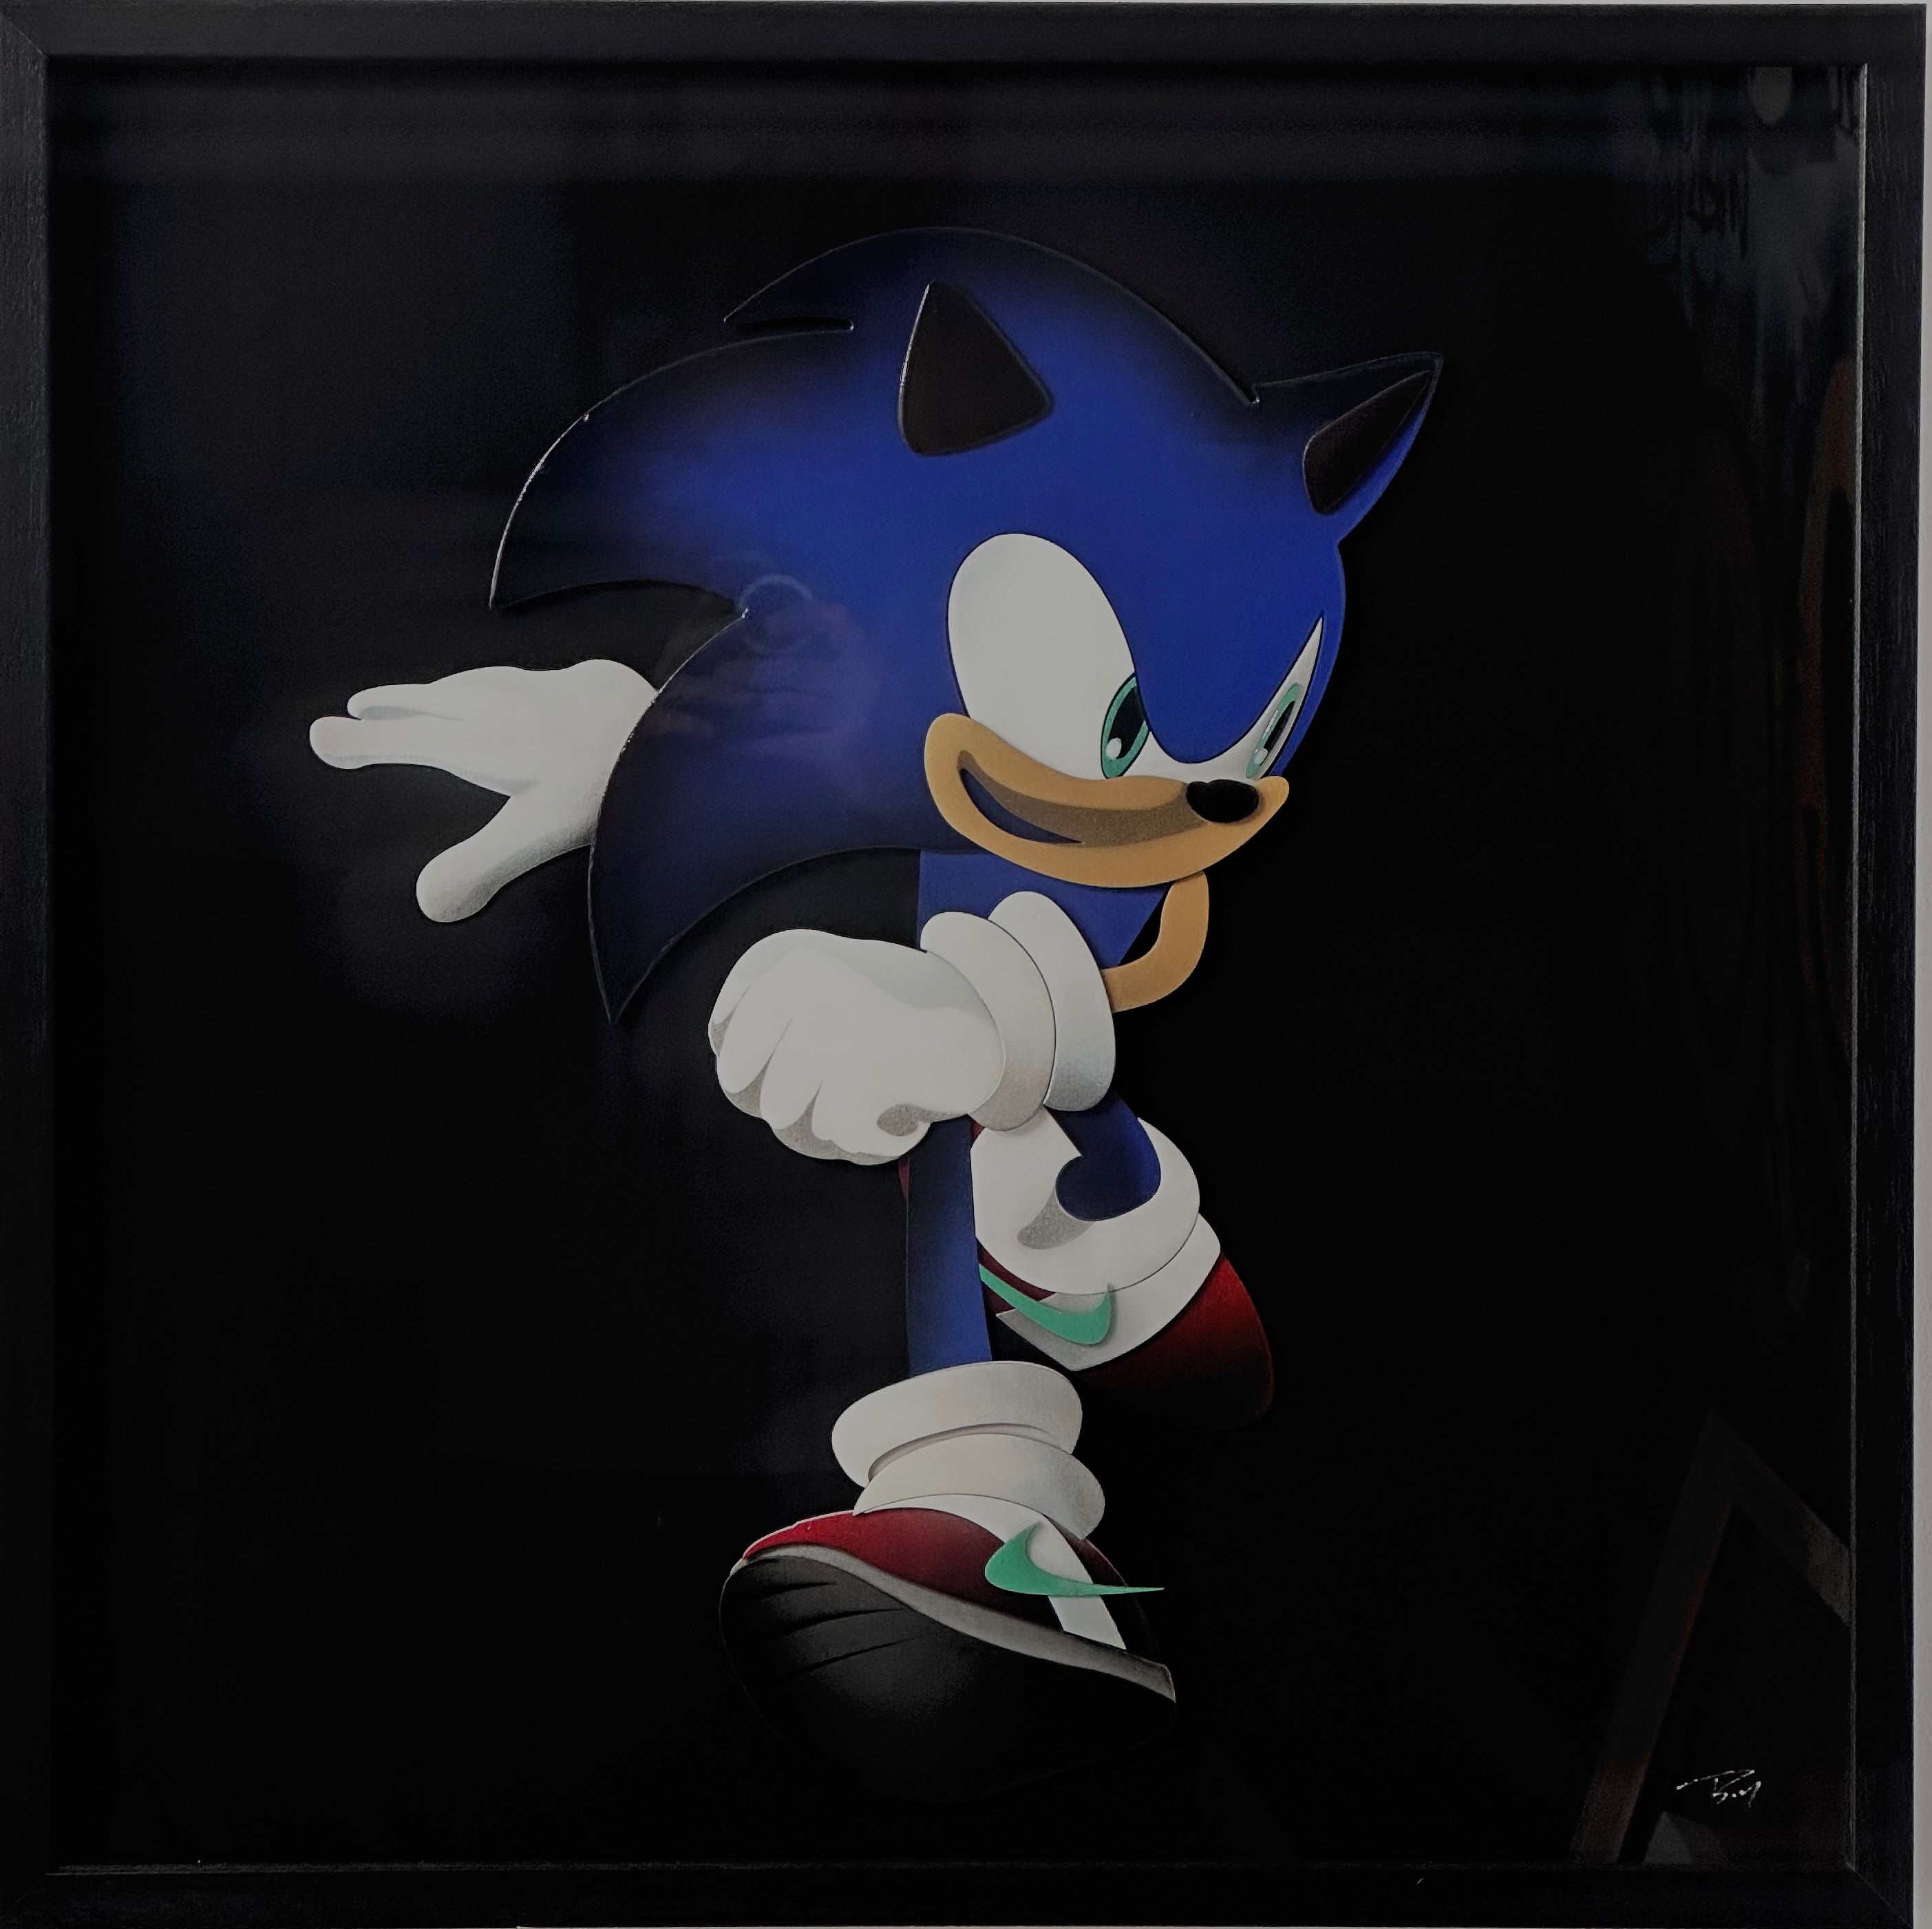 Sonic swoosh deepest black edition